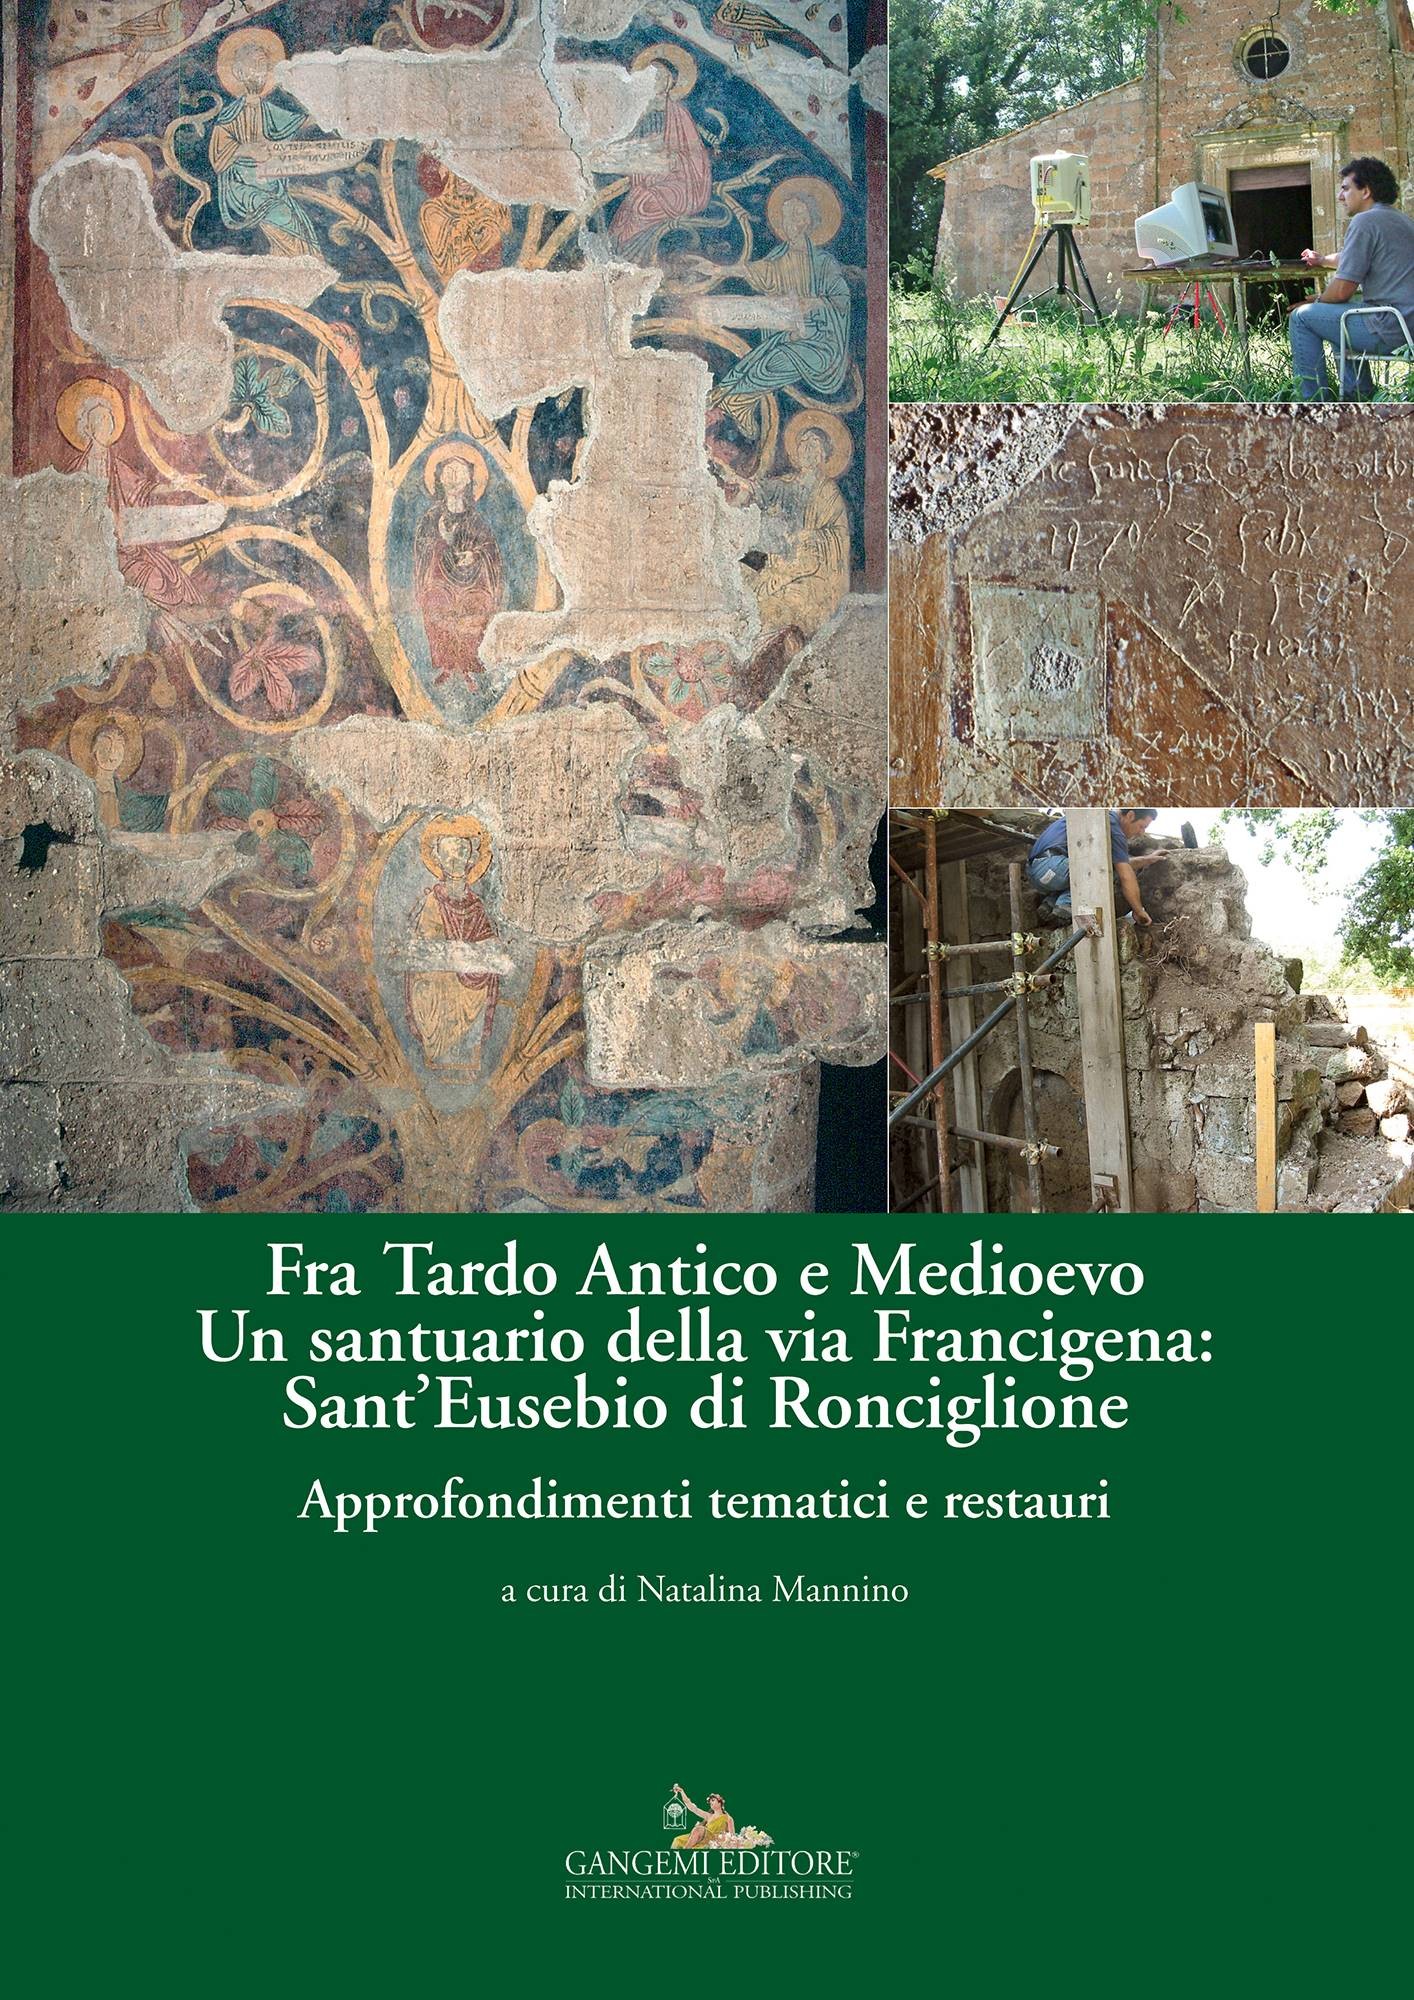 Fra Tardo Antico e Medioevo. Un santuario della via Francigena: SantEusebio di Ronciglione - Librerie.coop